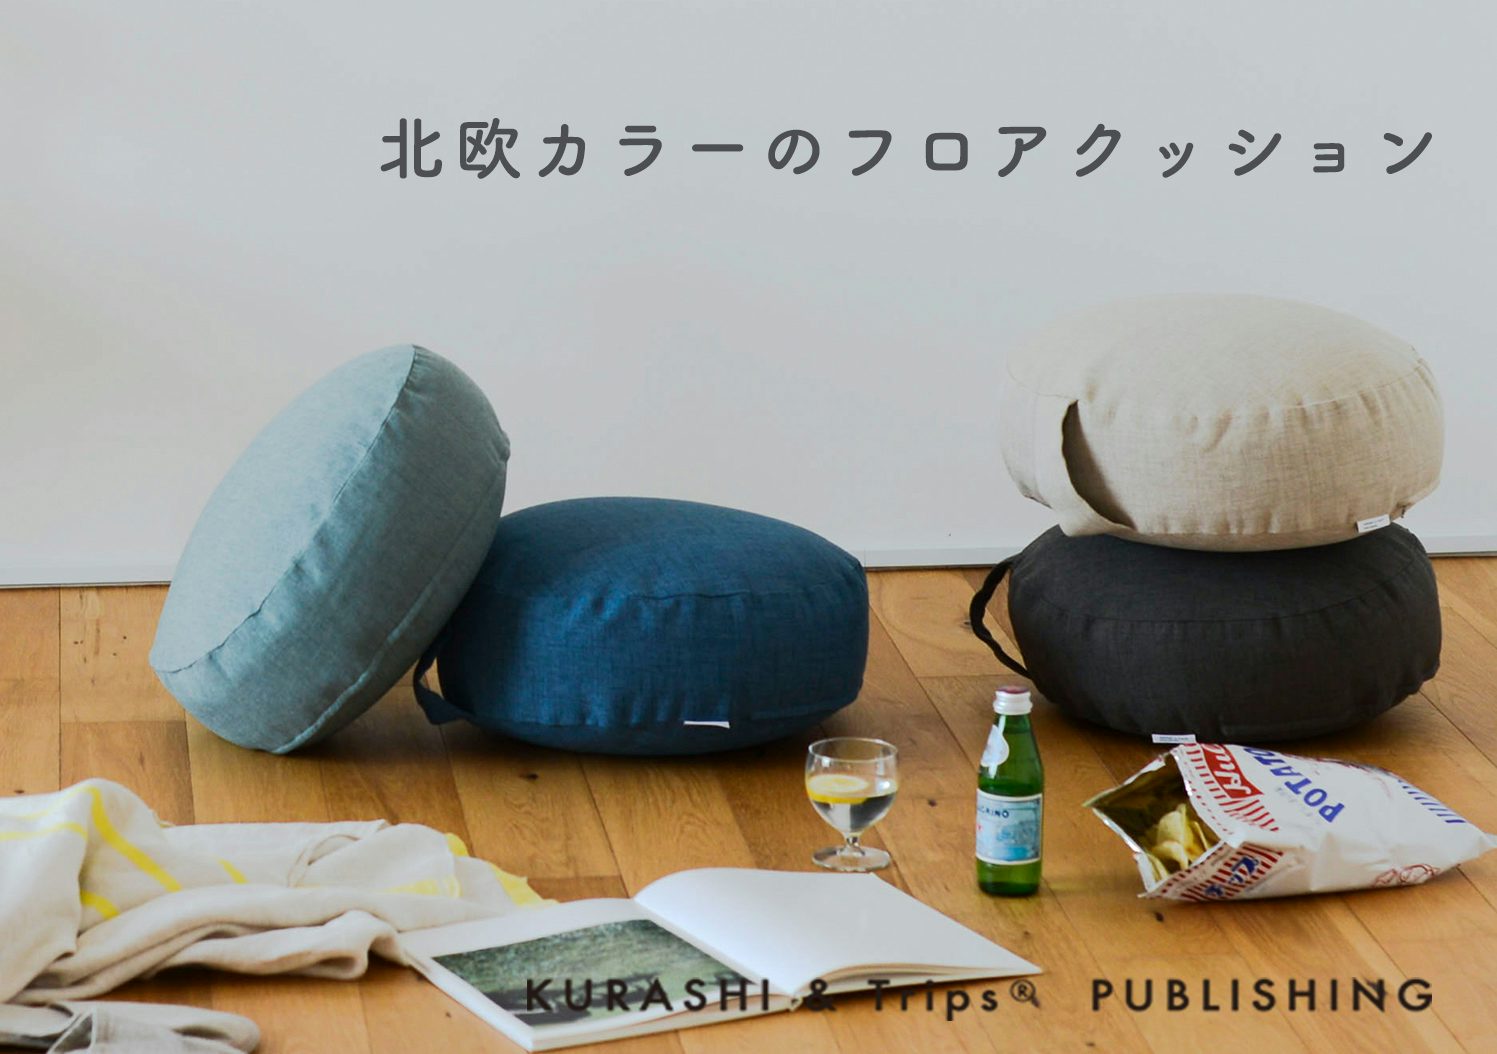 KURASHI&Trips PUBLISHING / フロアクッションの画像